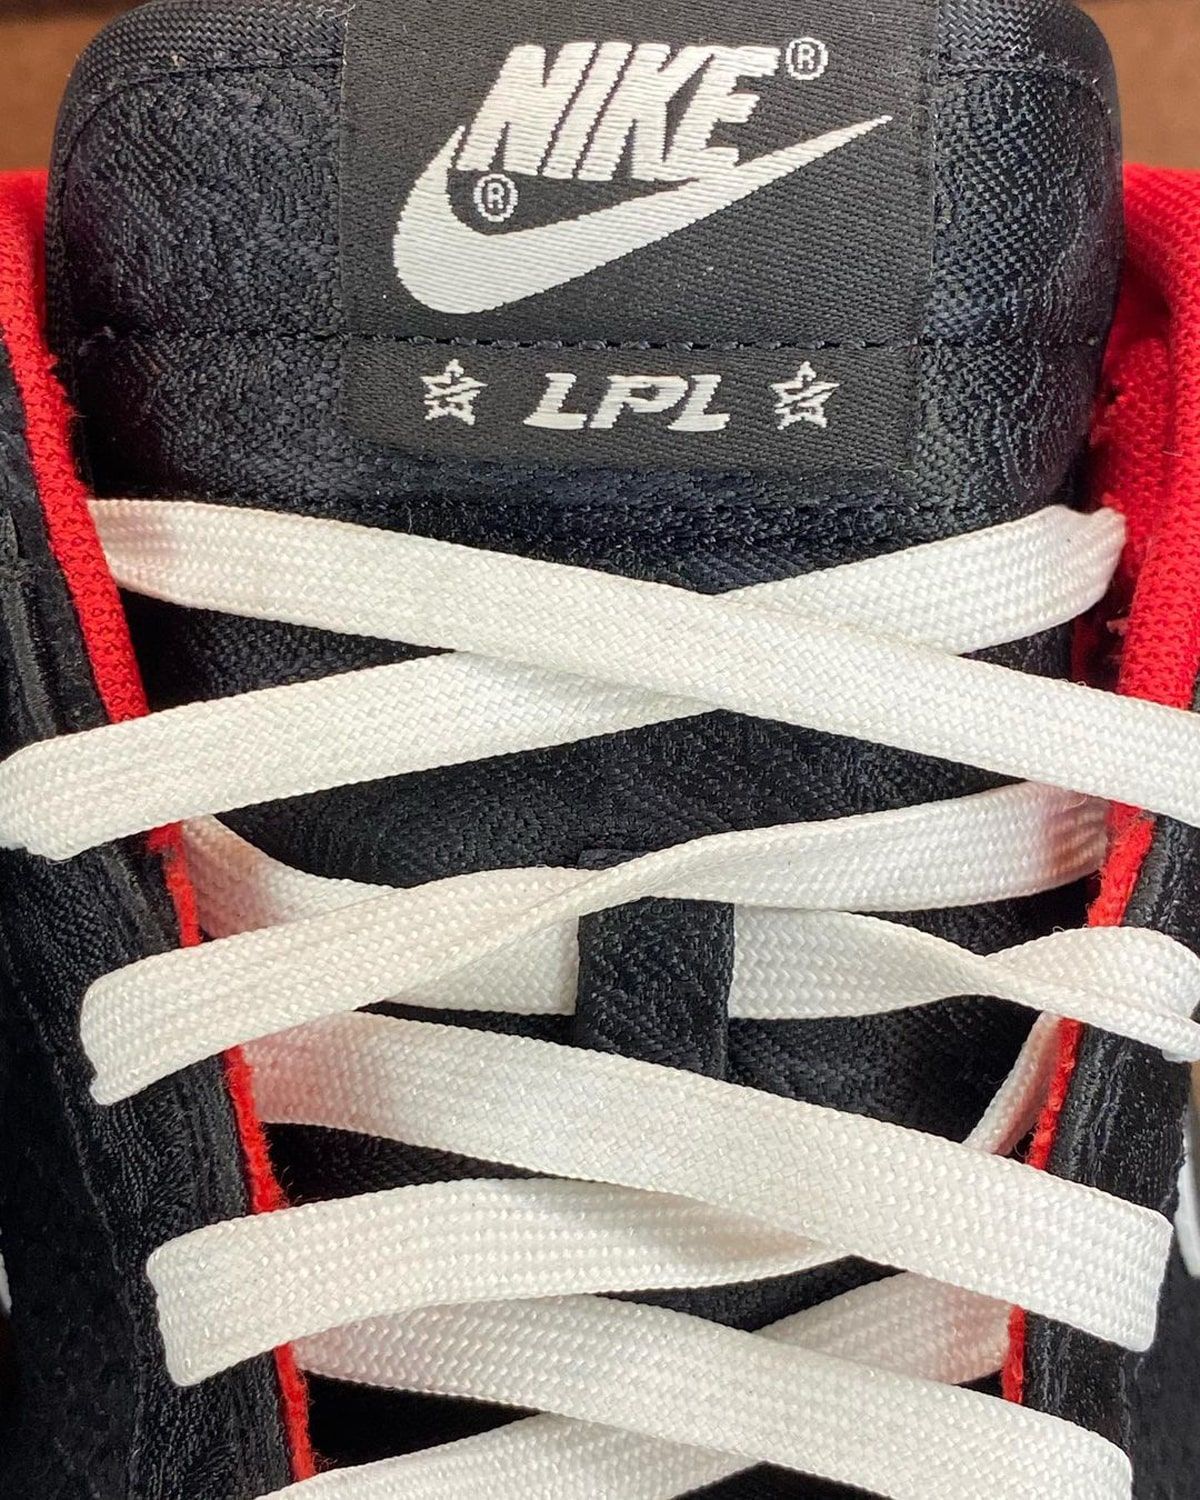 League of Legends x Nike Air Jordan 1 Zoom: Images & Rumored Info